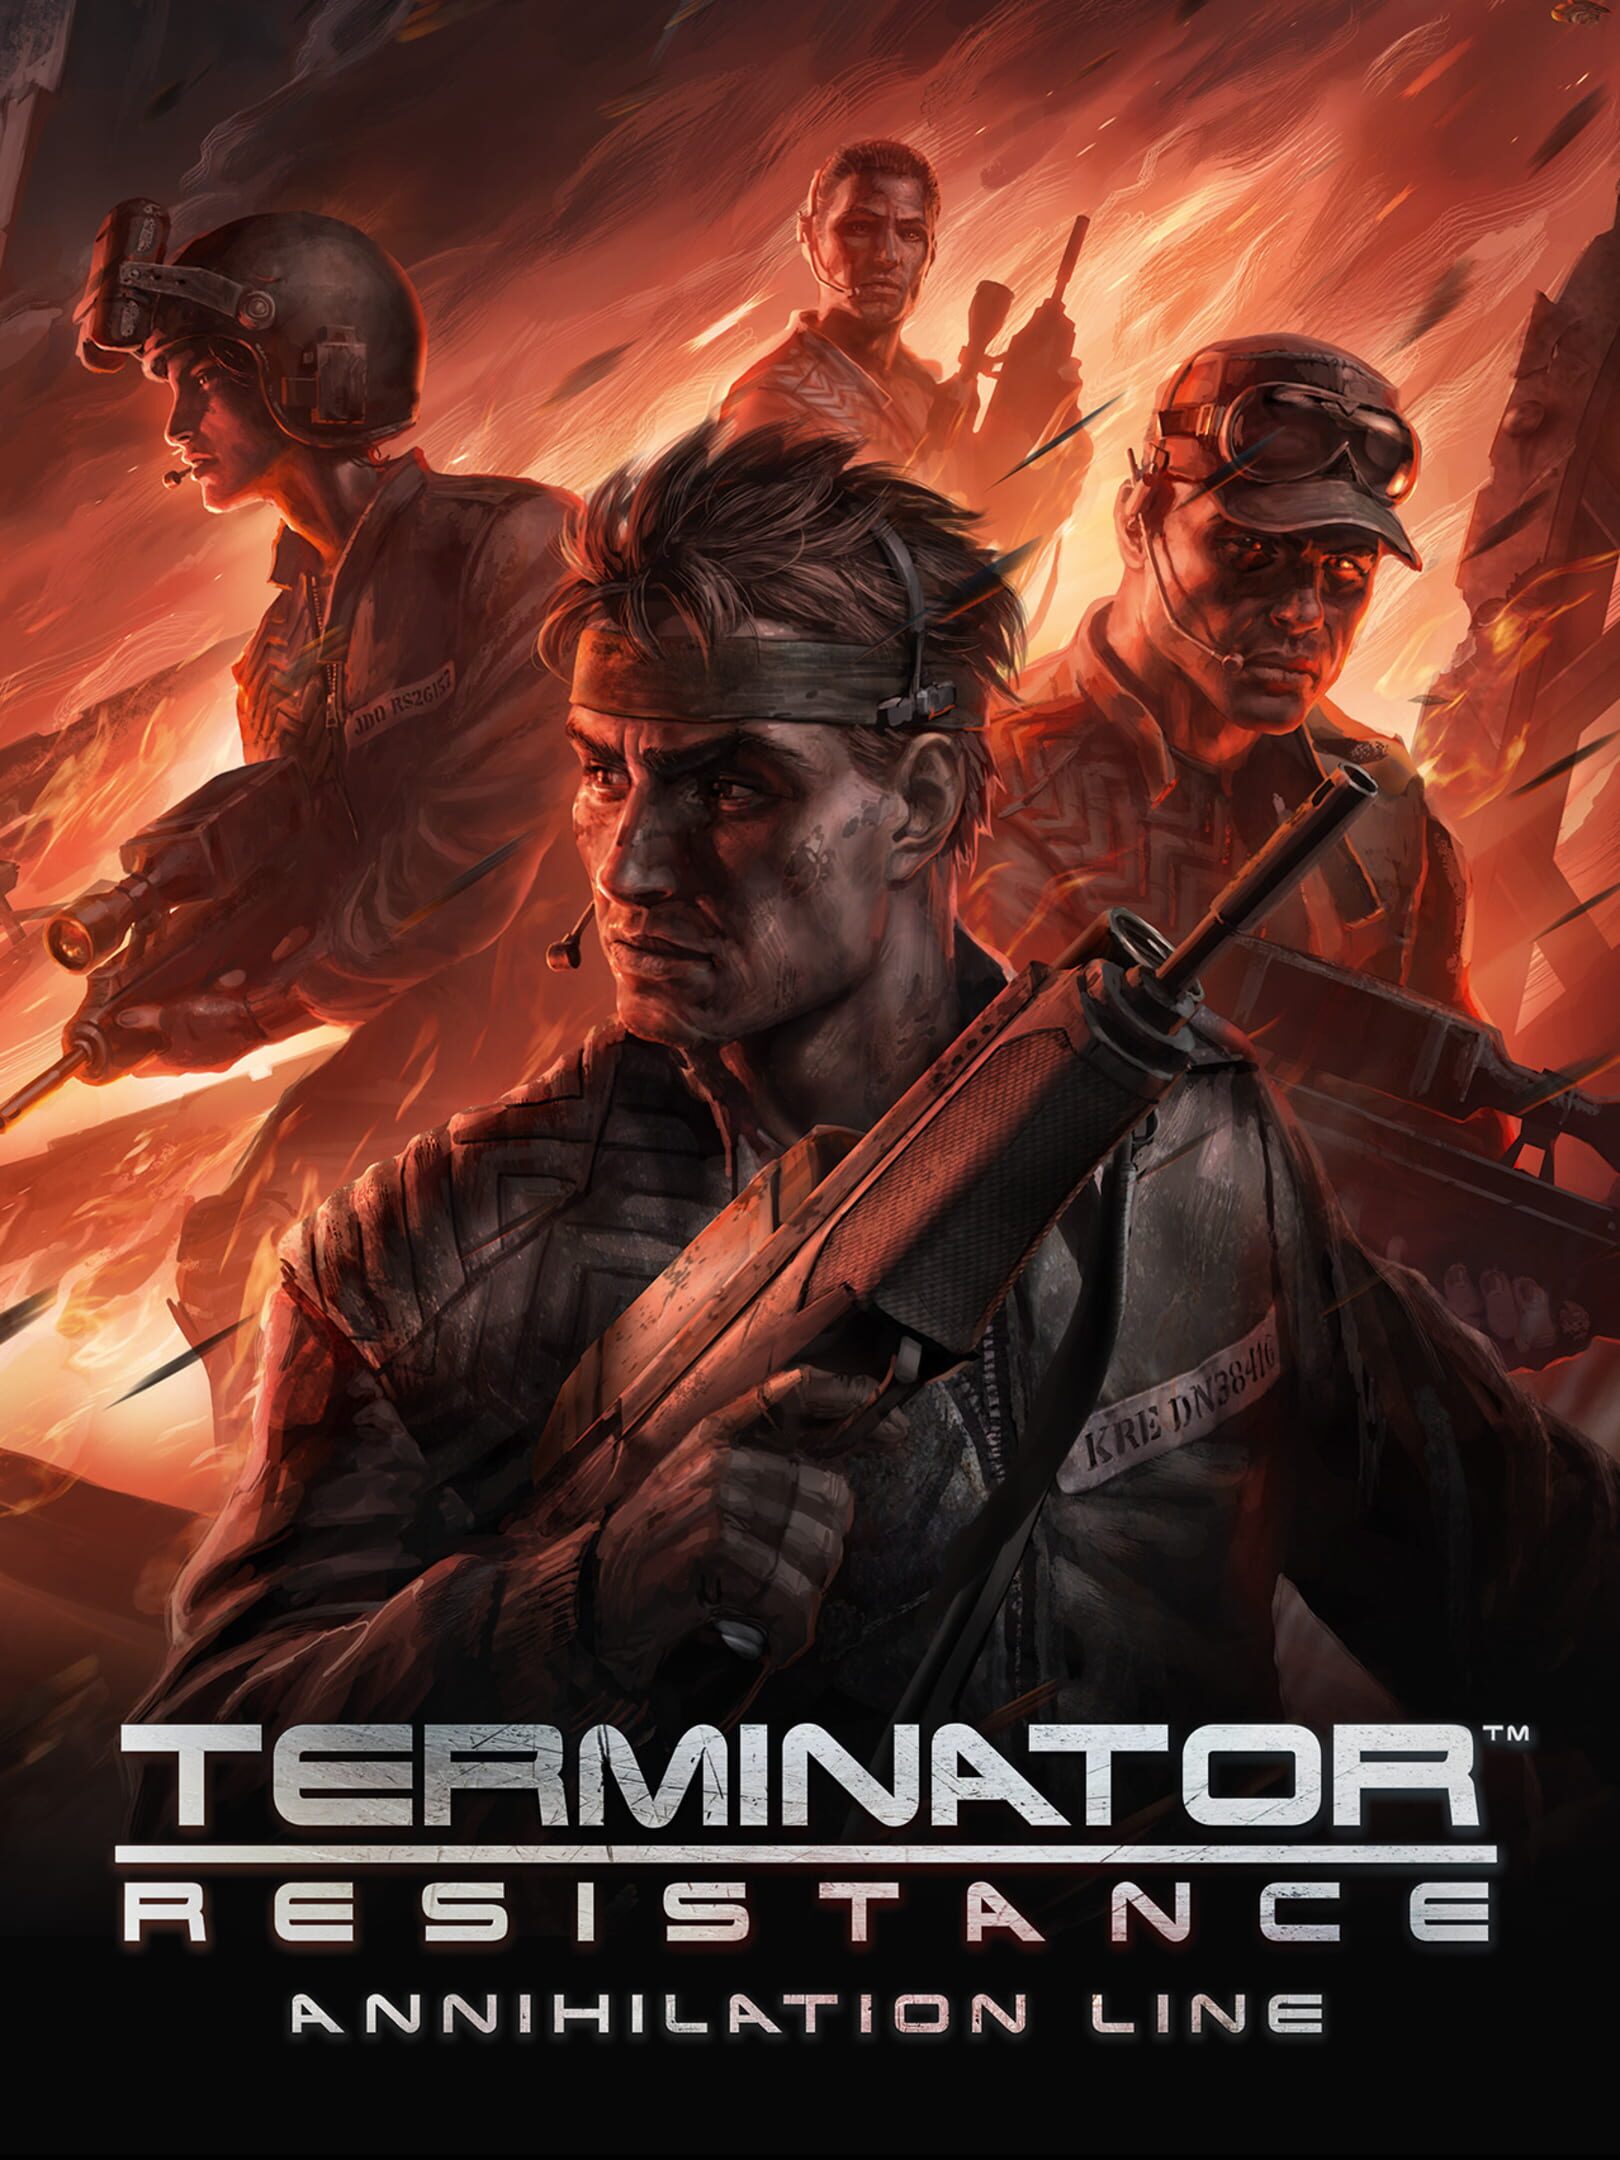 Terminator annihilation line. Терминатор Resistance Annihilation line. Terminator Resistance 2019. Терминатор резистанс Джейкоб Риверс Терминатор.